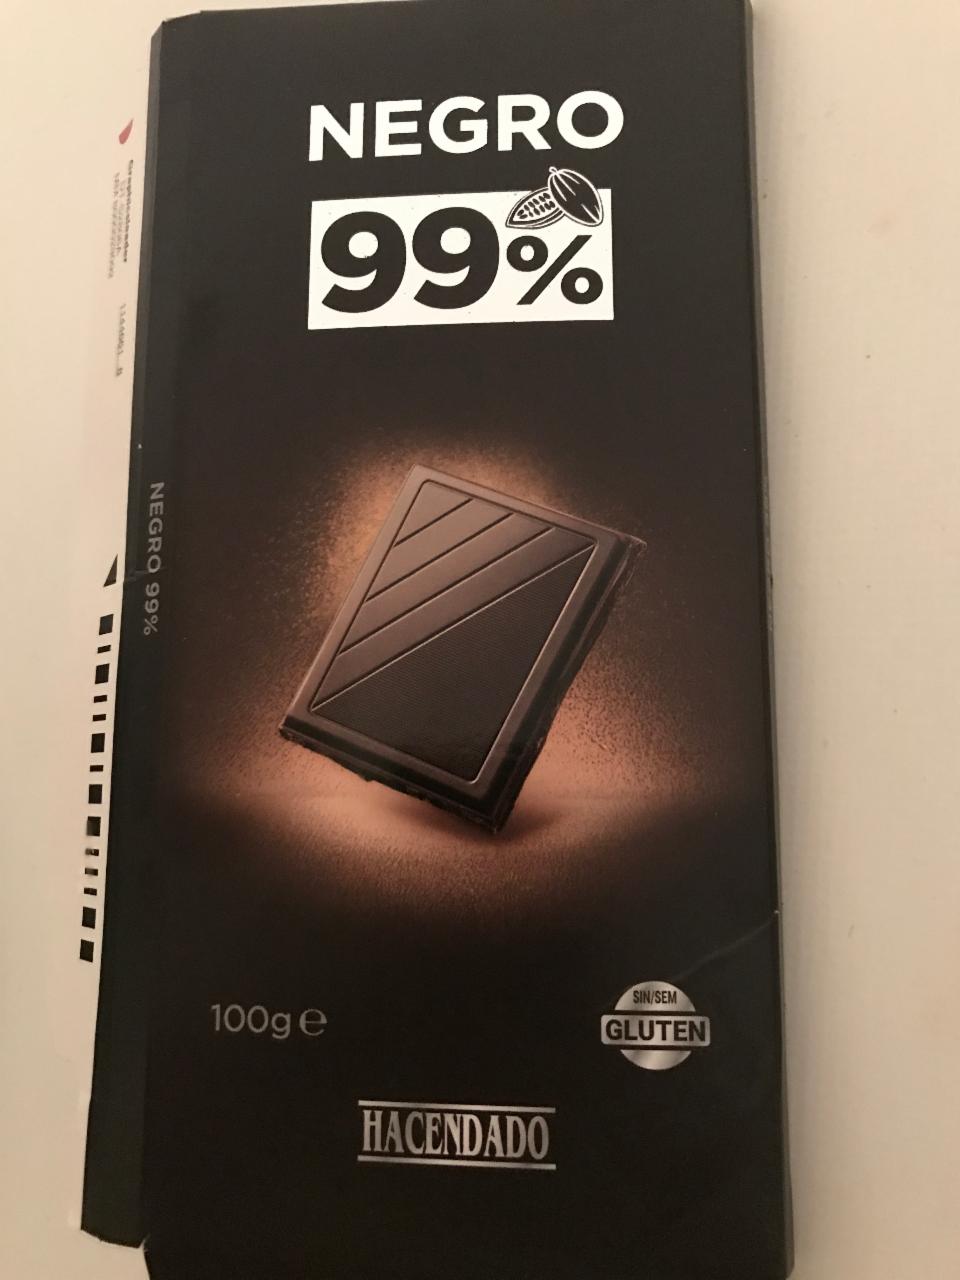 Фото - Chocolate 99% cacao Negro Hacendado